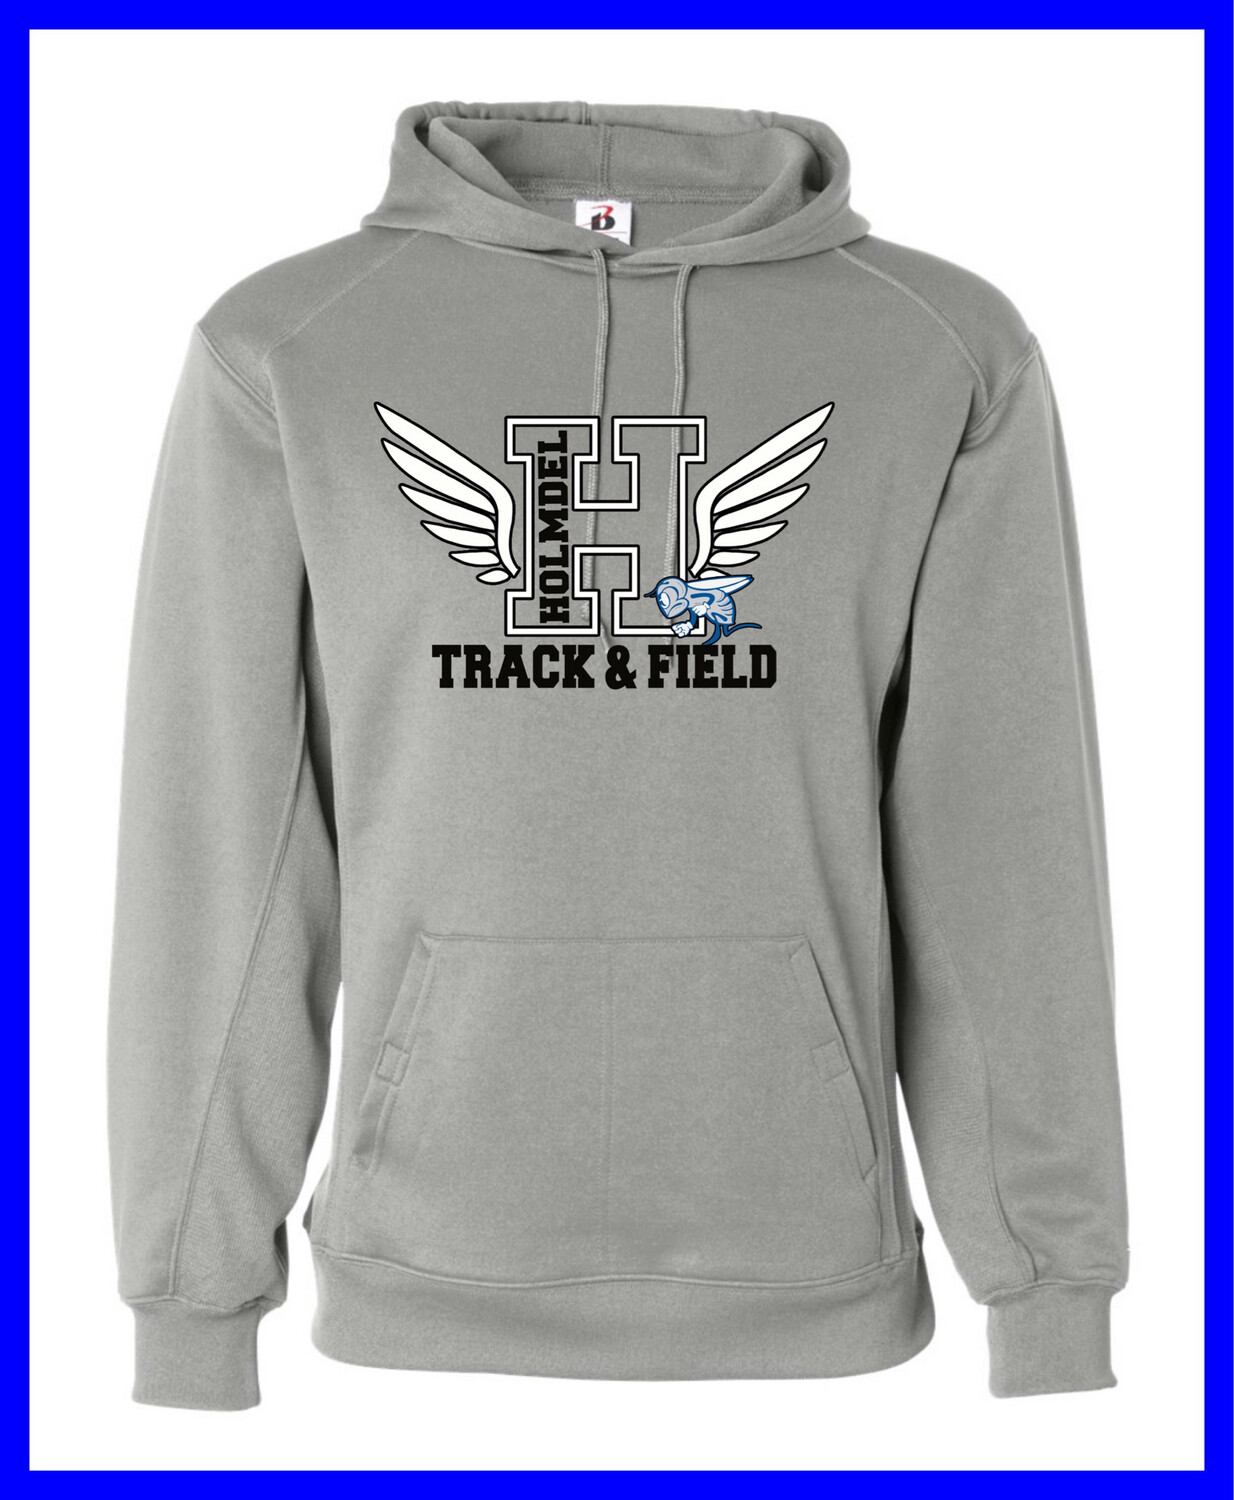 Silver Performance Fleece dri Fit Holmdel Track &amp; Field Sweatshirt- Badger Sport